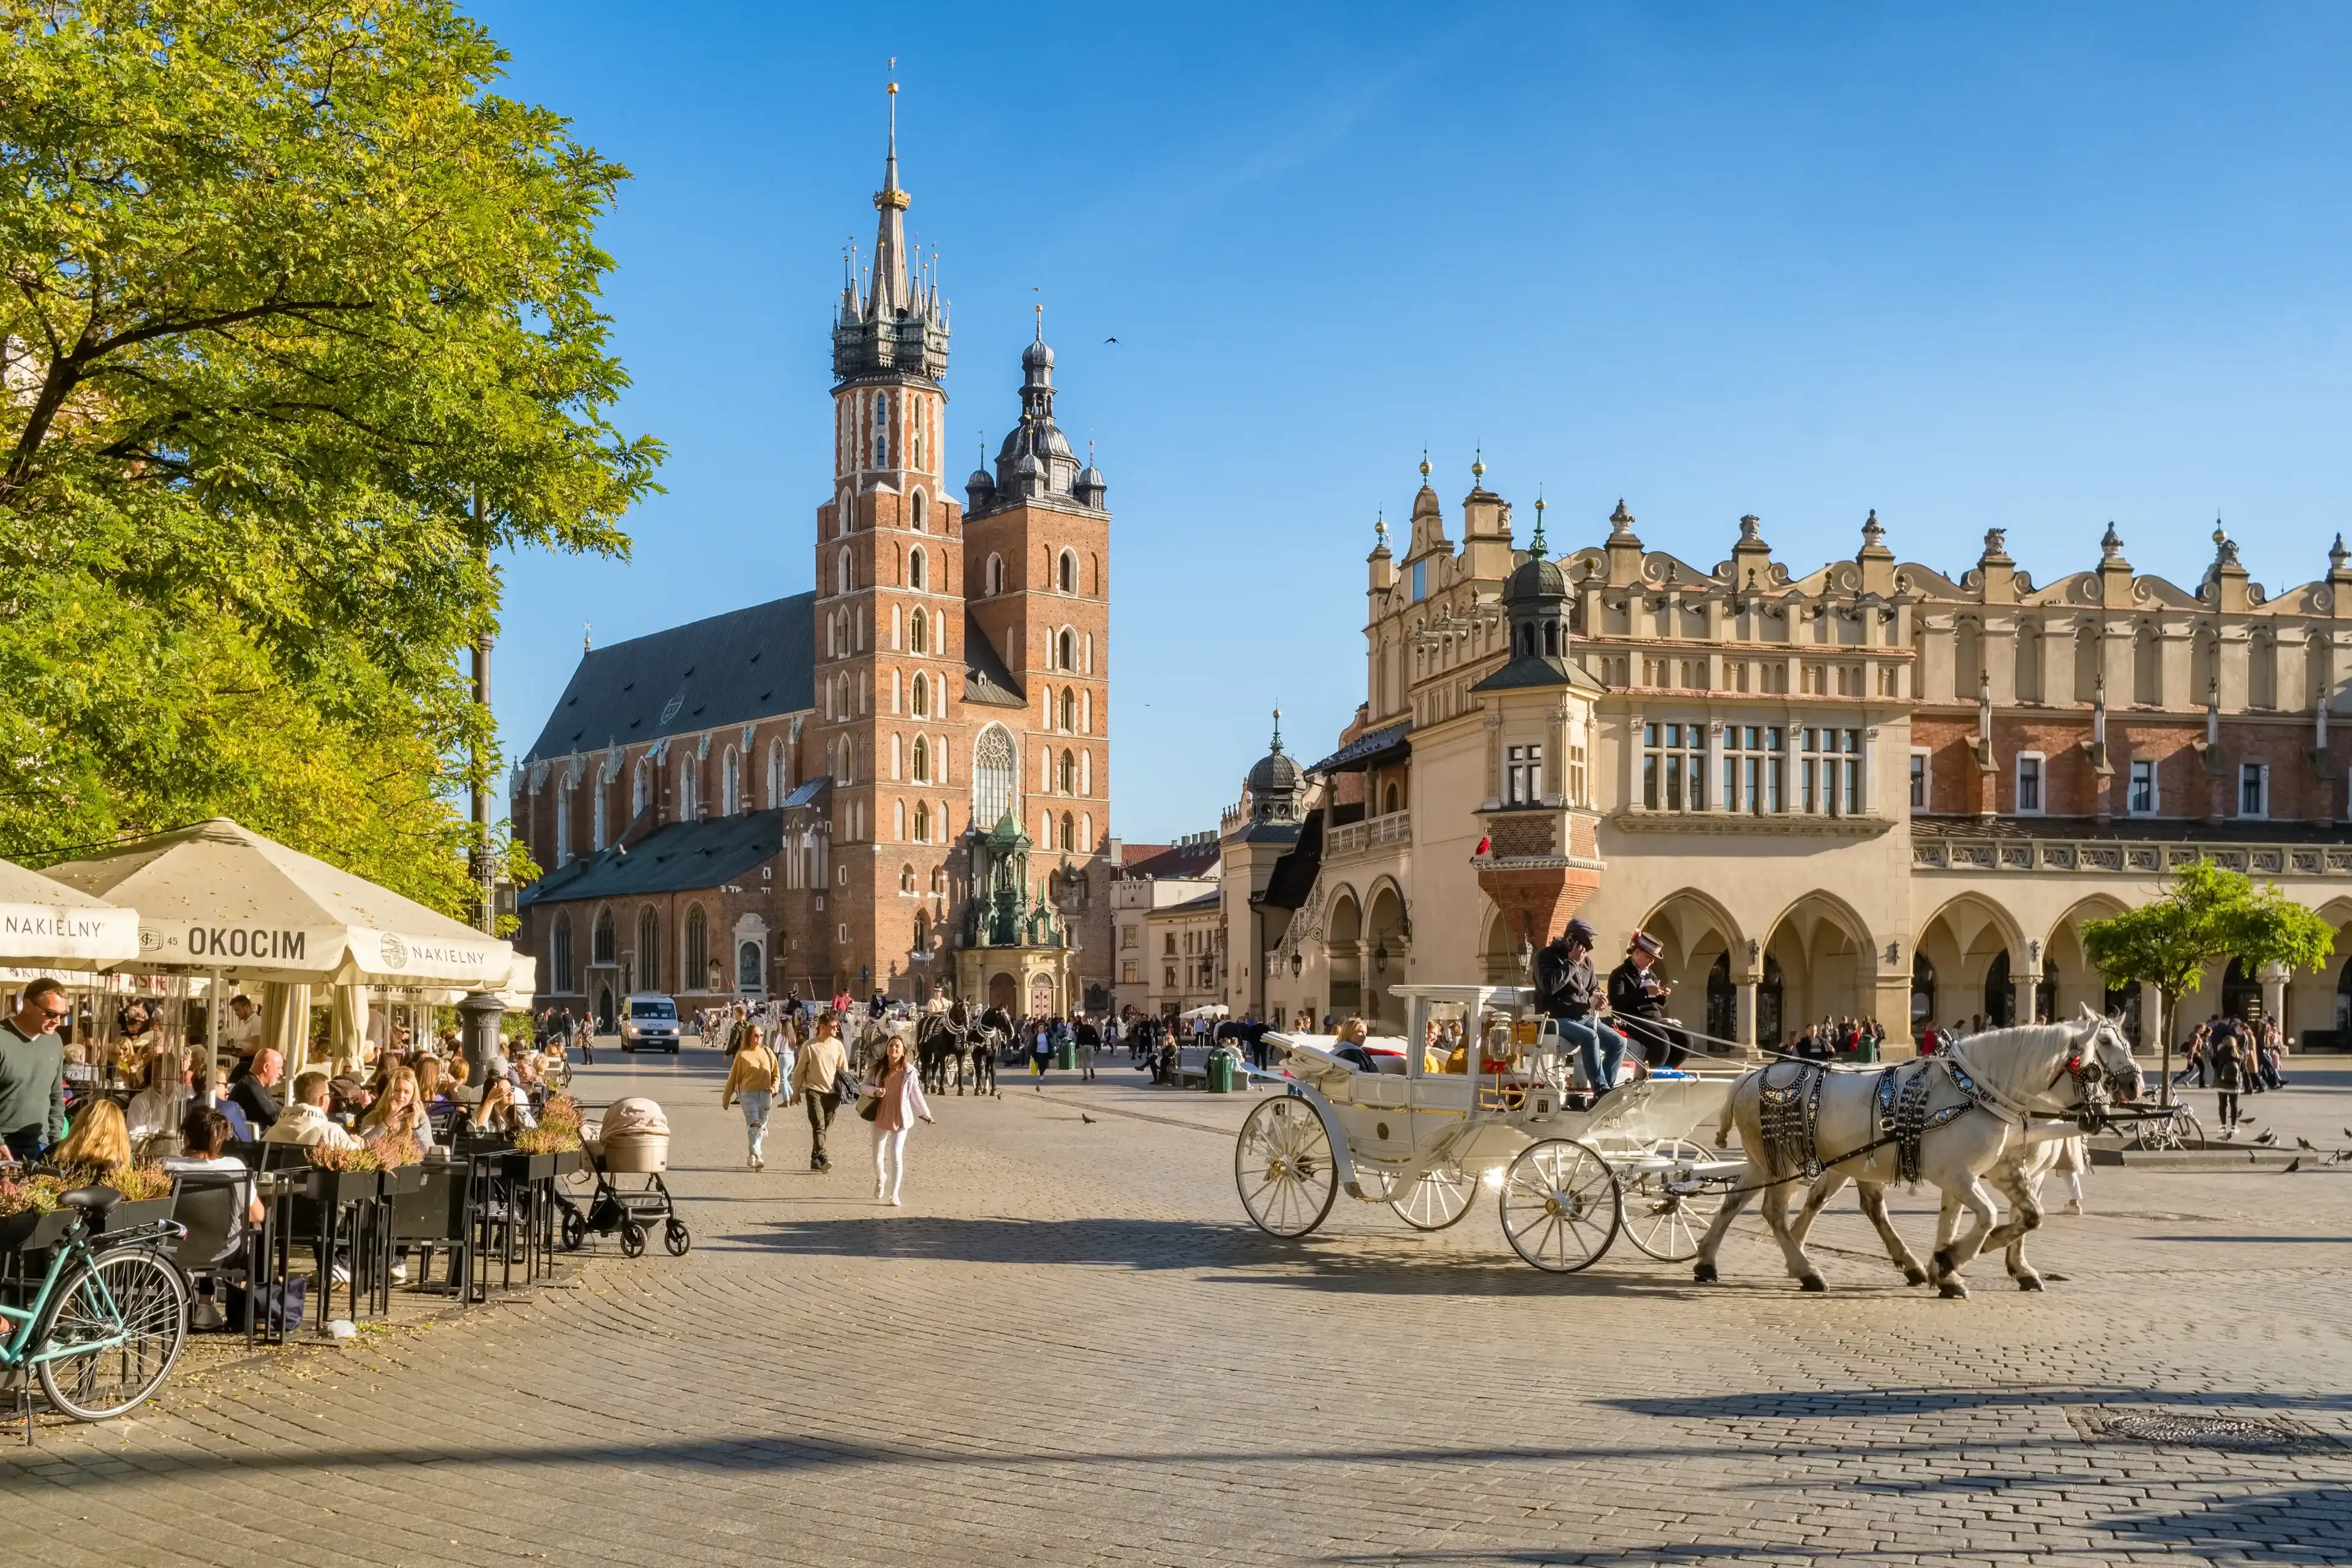 Krakow, Poland - October 27, 2022: Krakow cloth hall and Saint Mary's Basilica on the main market square at sunny day in Cracow, Poland.